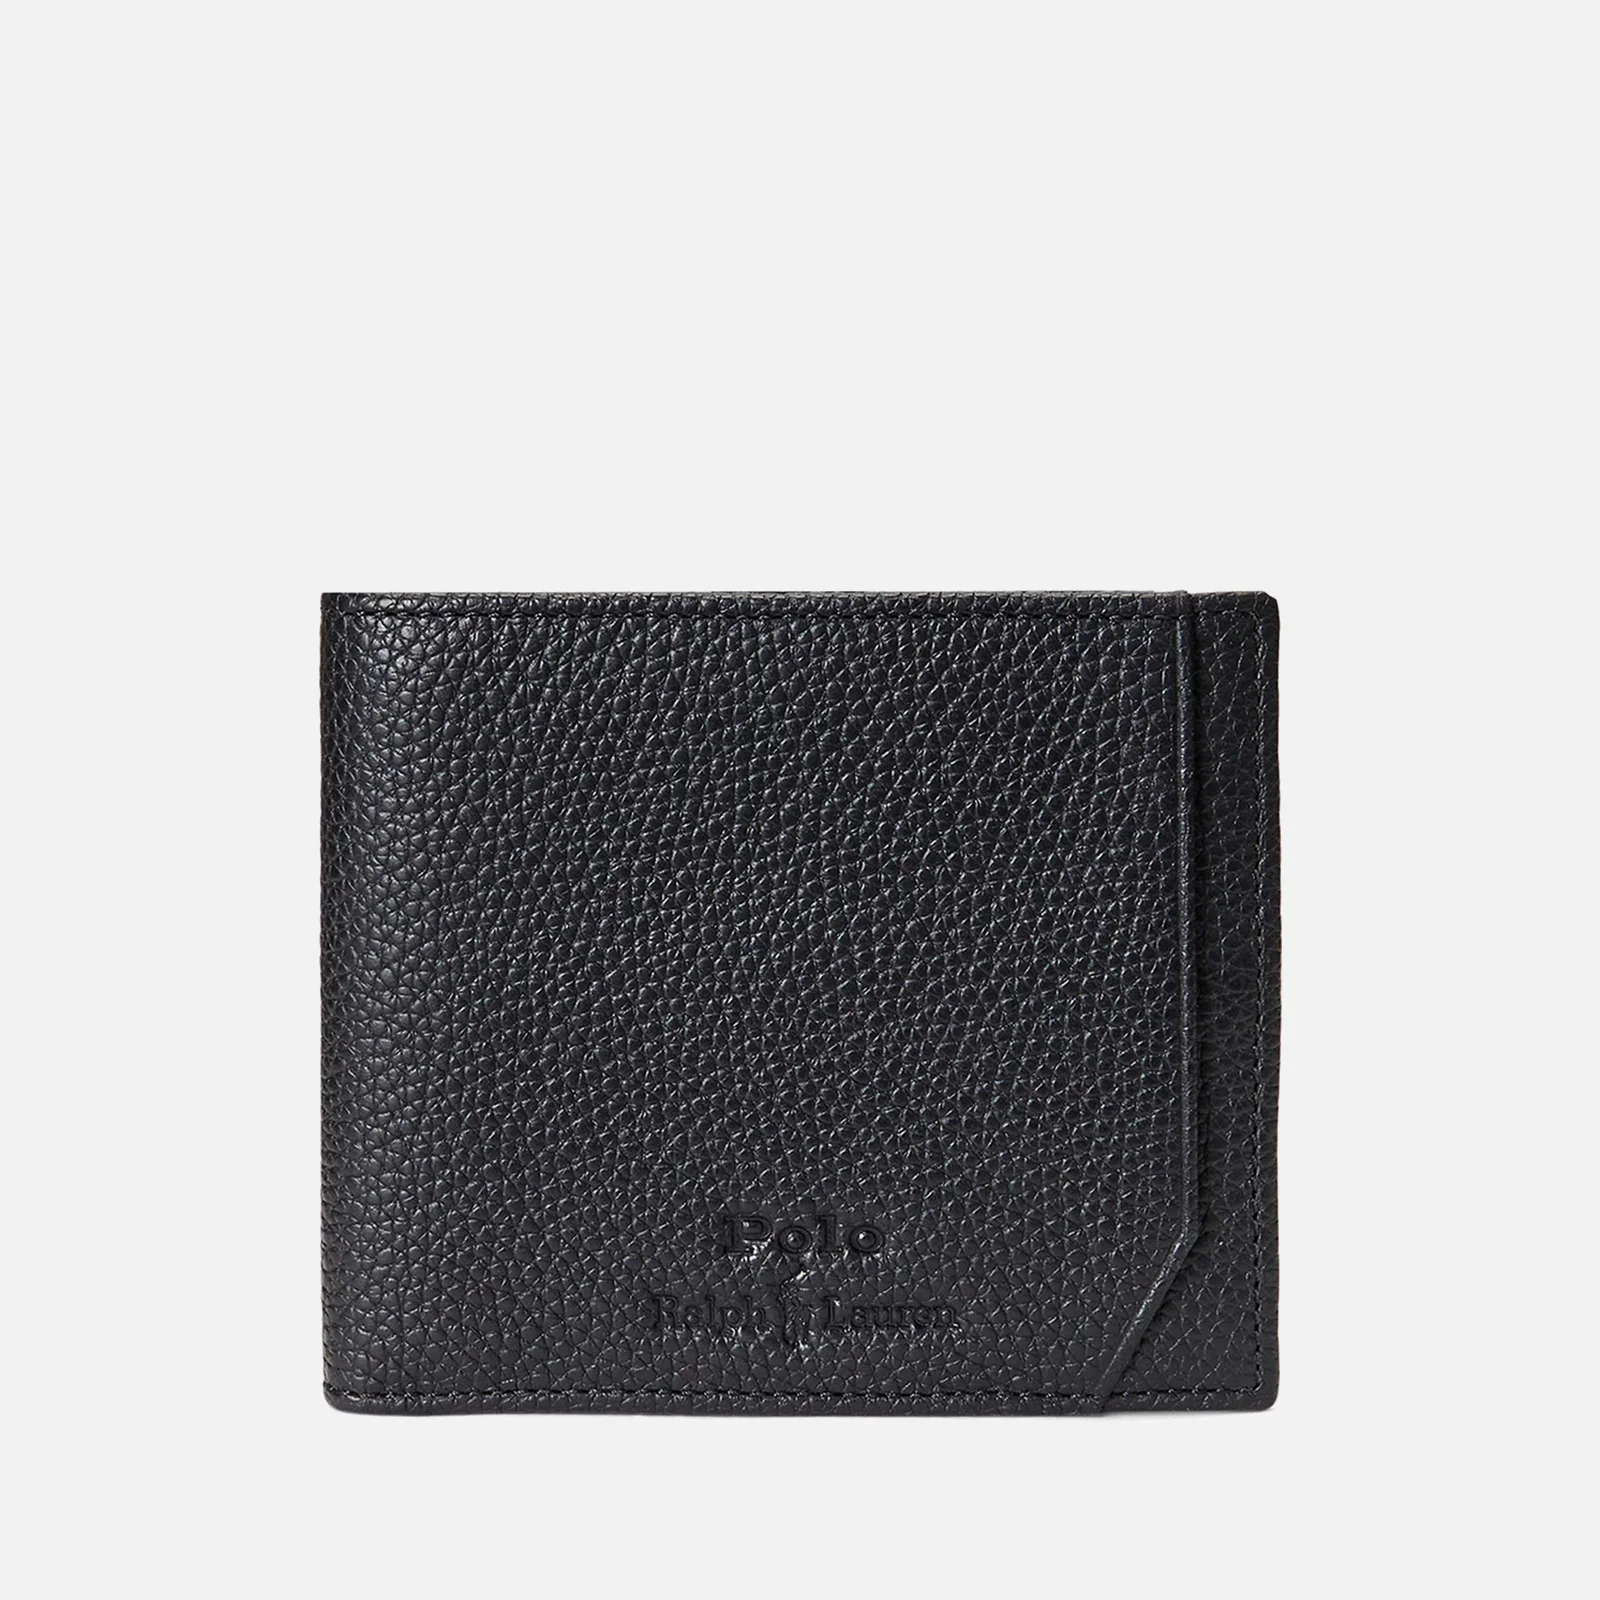 Polo Ralph Lauren Medium Leather Billfold Wallet Image 1